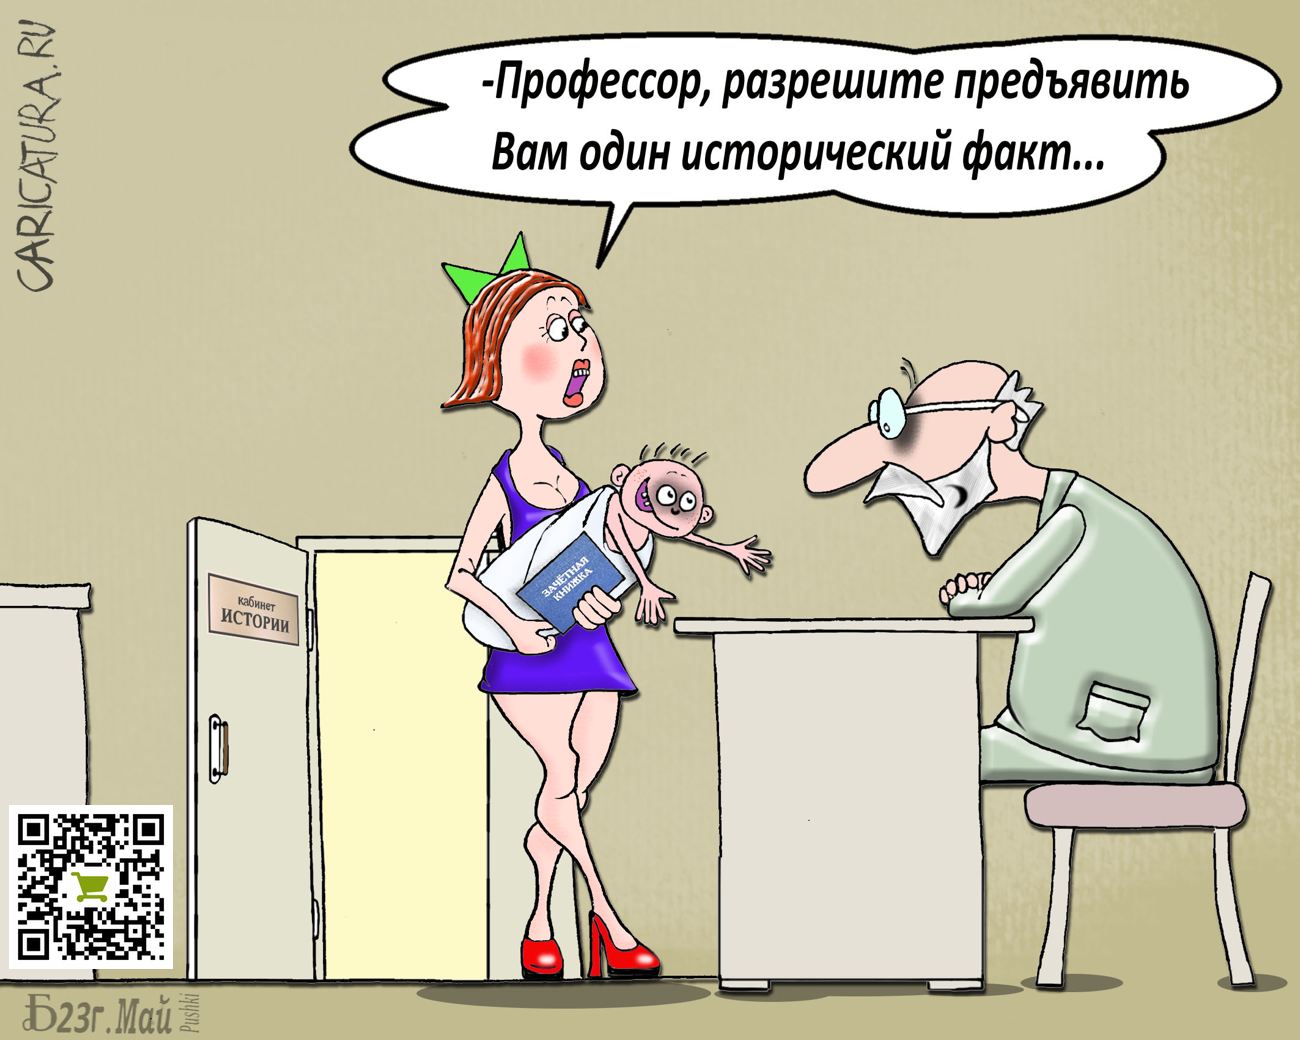 Карикатура "ПроИсторический факт", Борис Демин